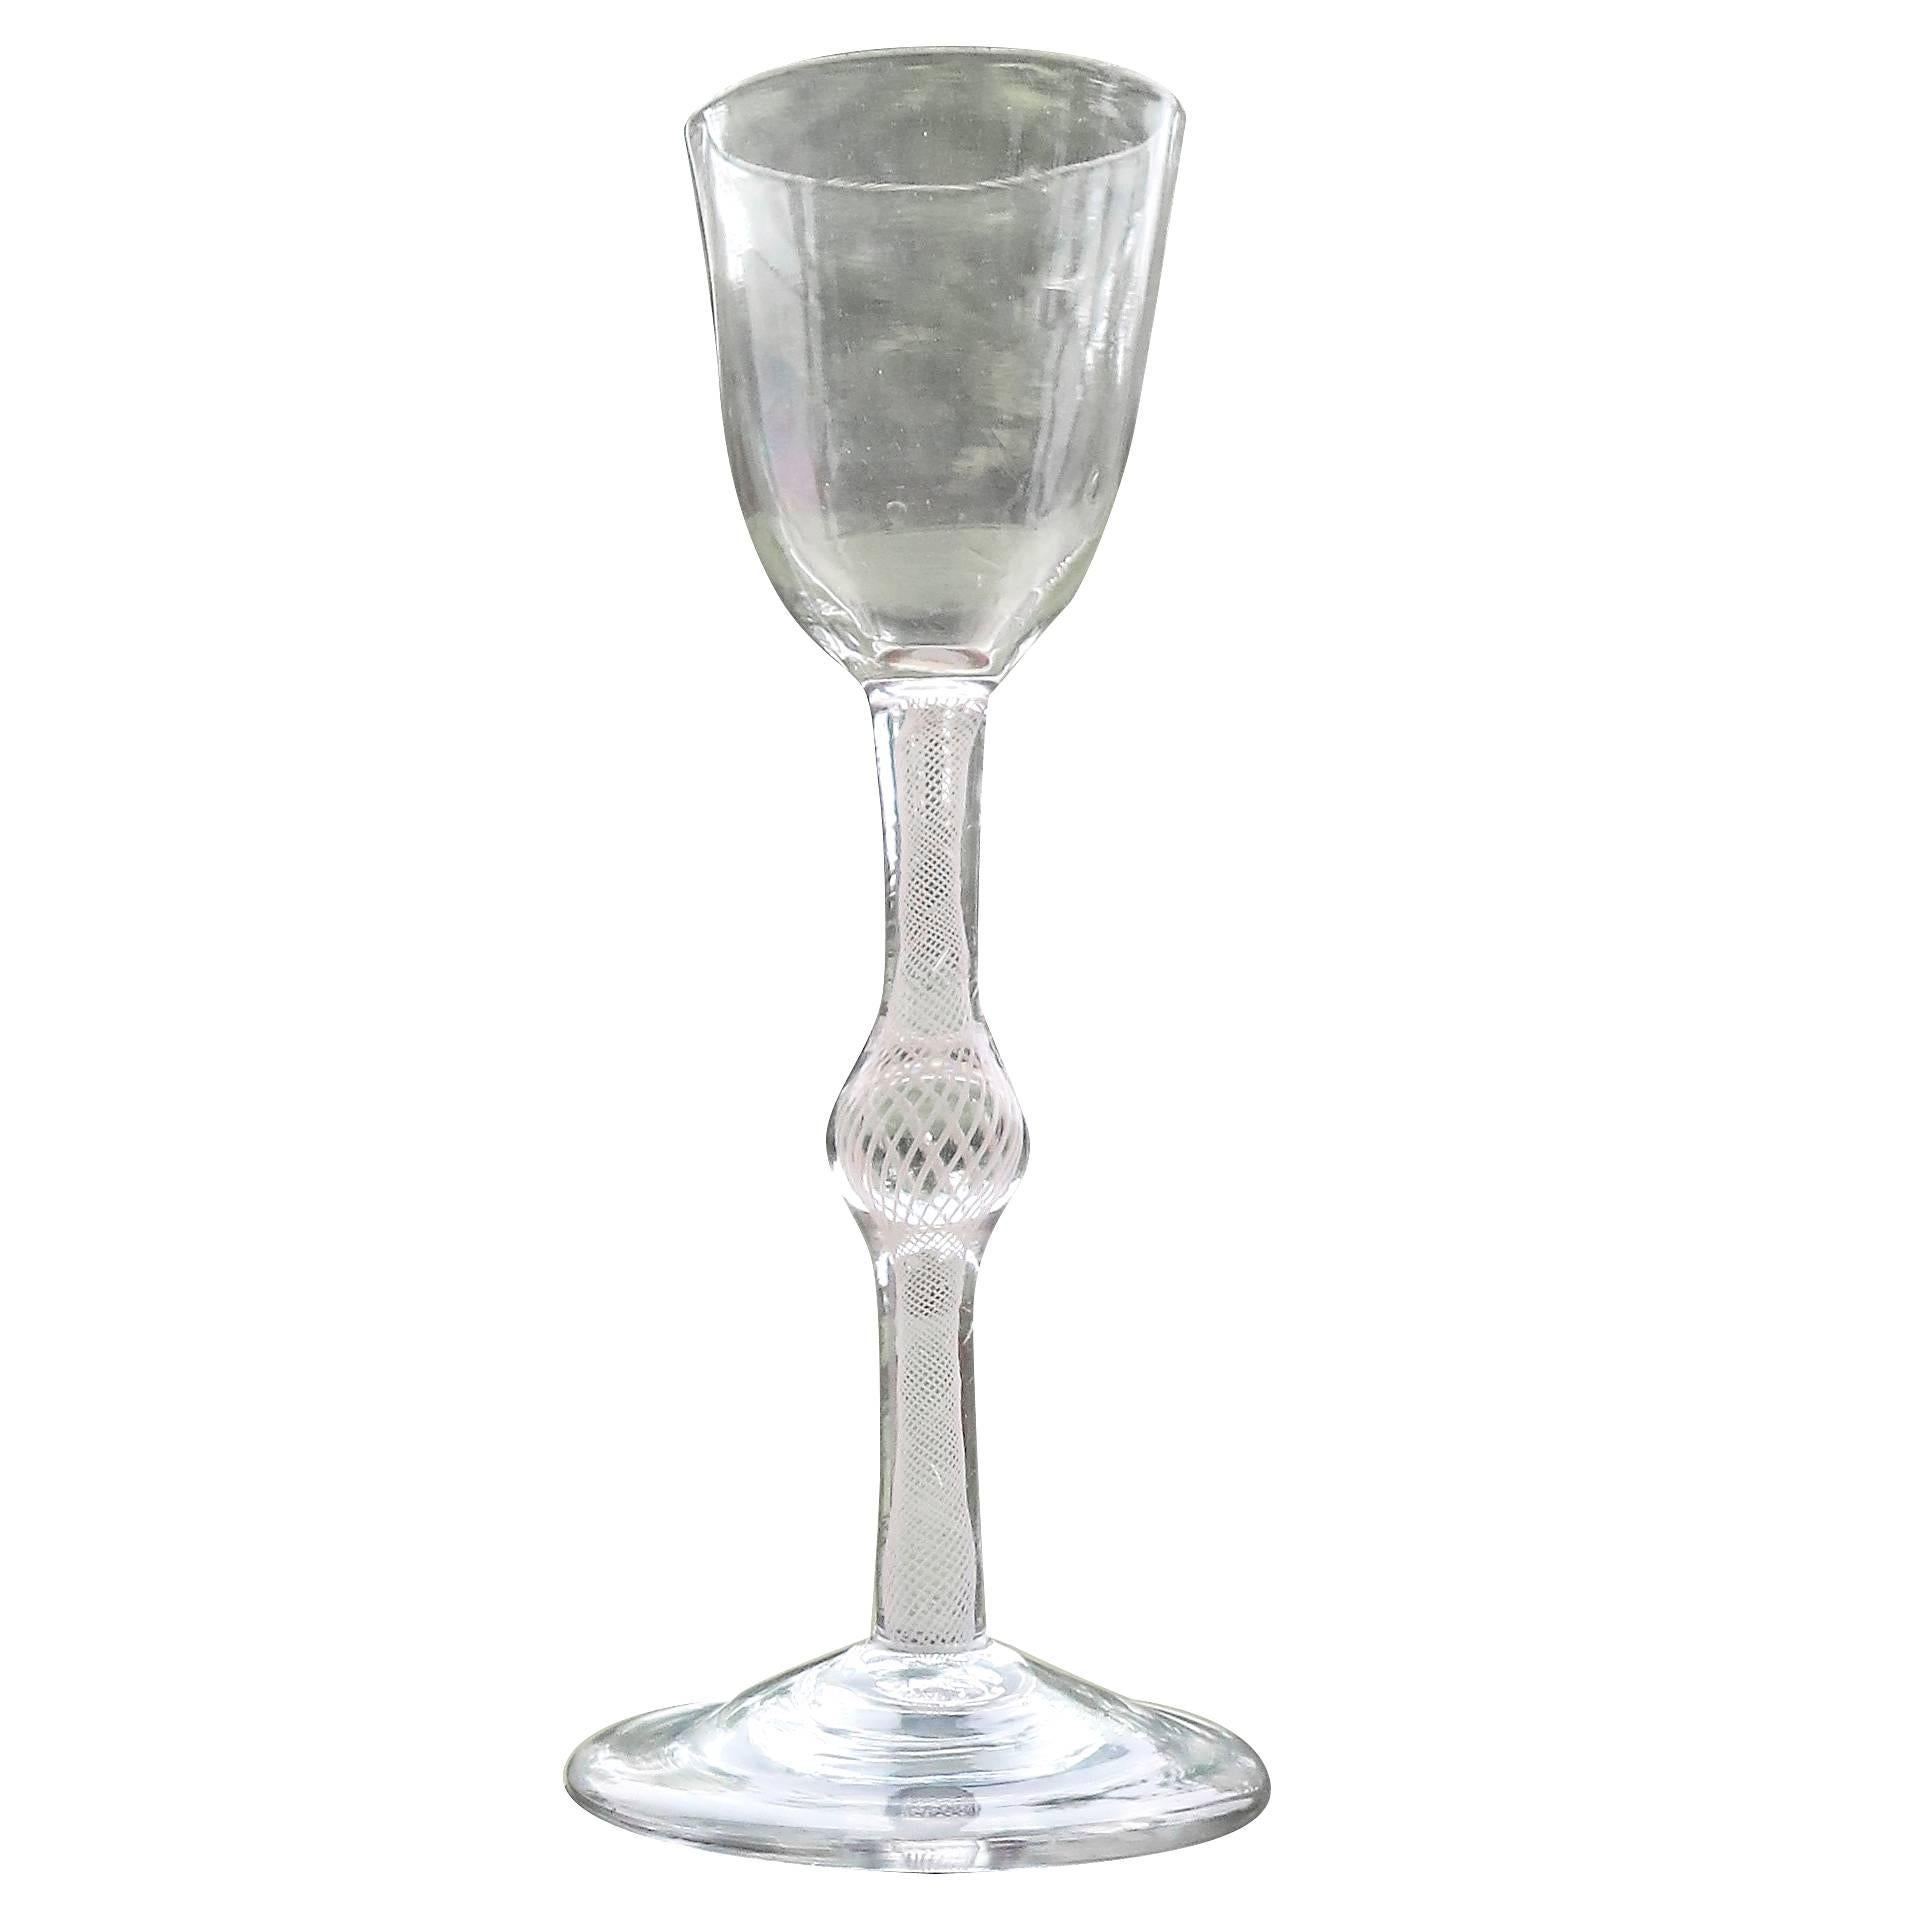 Georgian Wine Glass Handblown Cotton Twist Stem, English Circa 1765